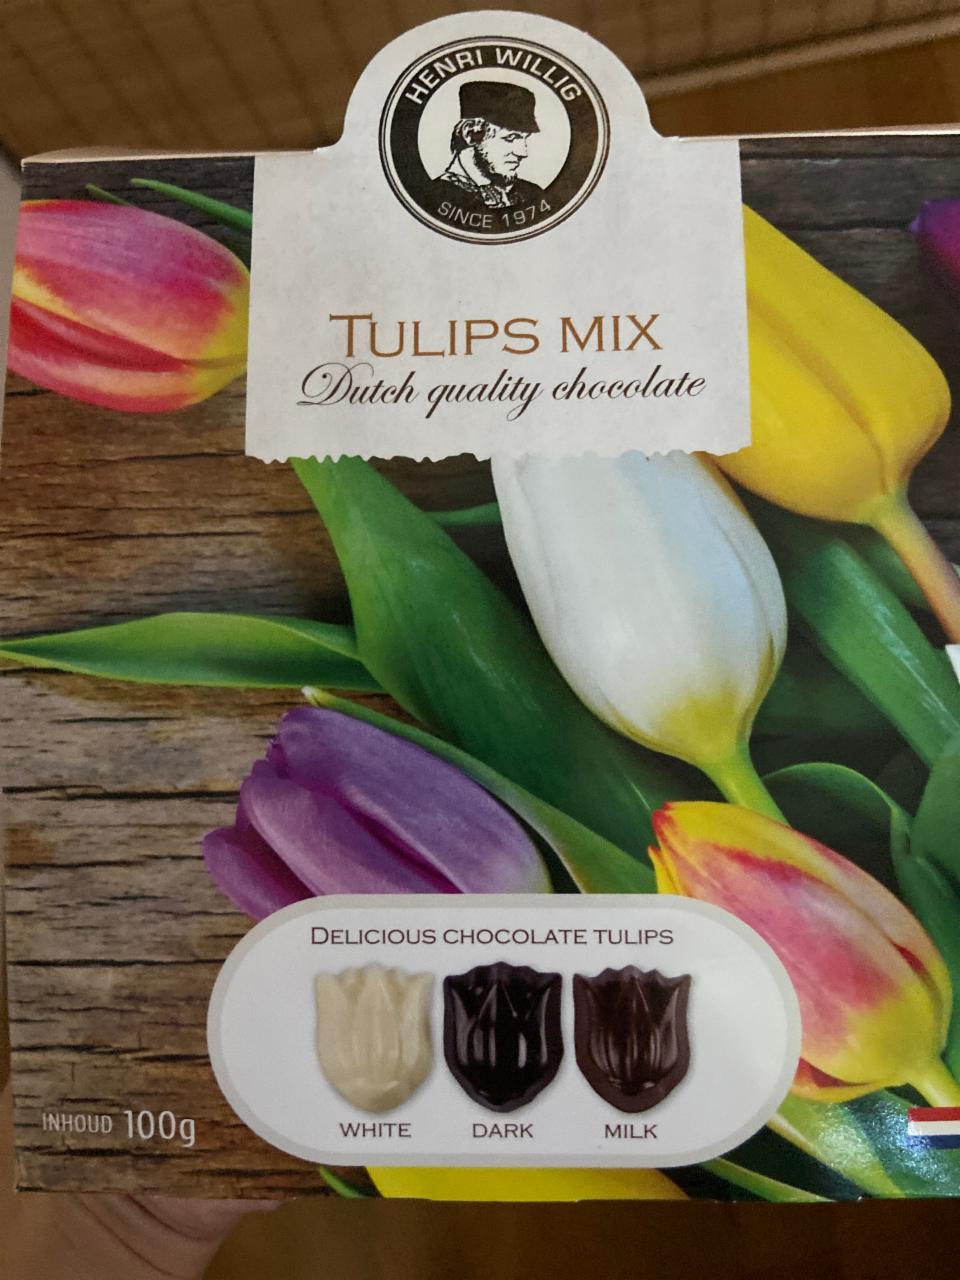 Fotografie - Tulips Mix Henri Willig